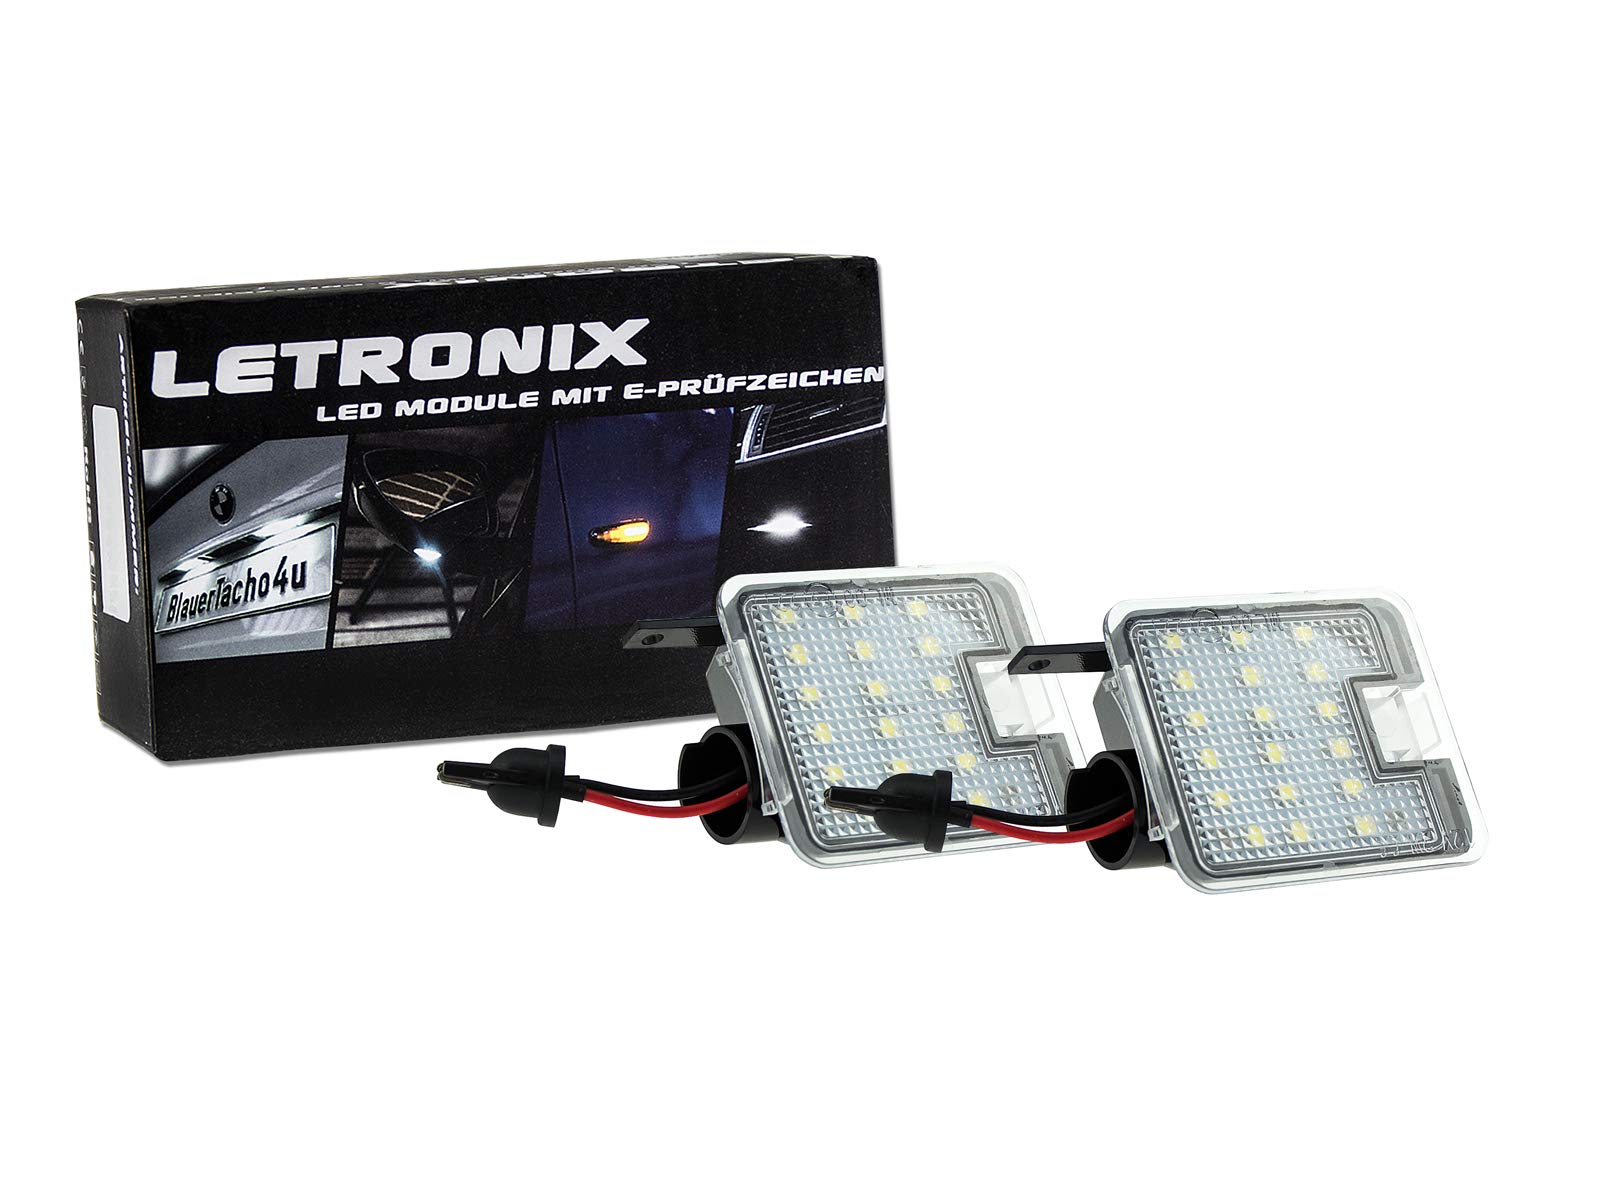 LETRONIX SMD LED Umfeldbeleuchtung Ausstiegsbeleuchtung Module Geeignet für/Kompatibel mit: C-Max/C-Max 2 II auch Grand C-Max/Focus 3 III/Kuga/Kuga 2 II/Mondeo 5 V/S-Max 2 II von letronix